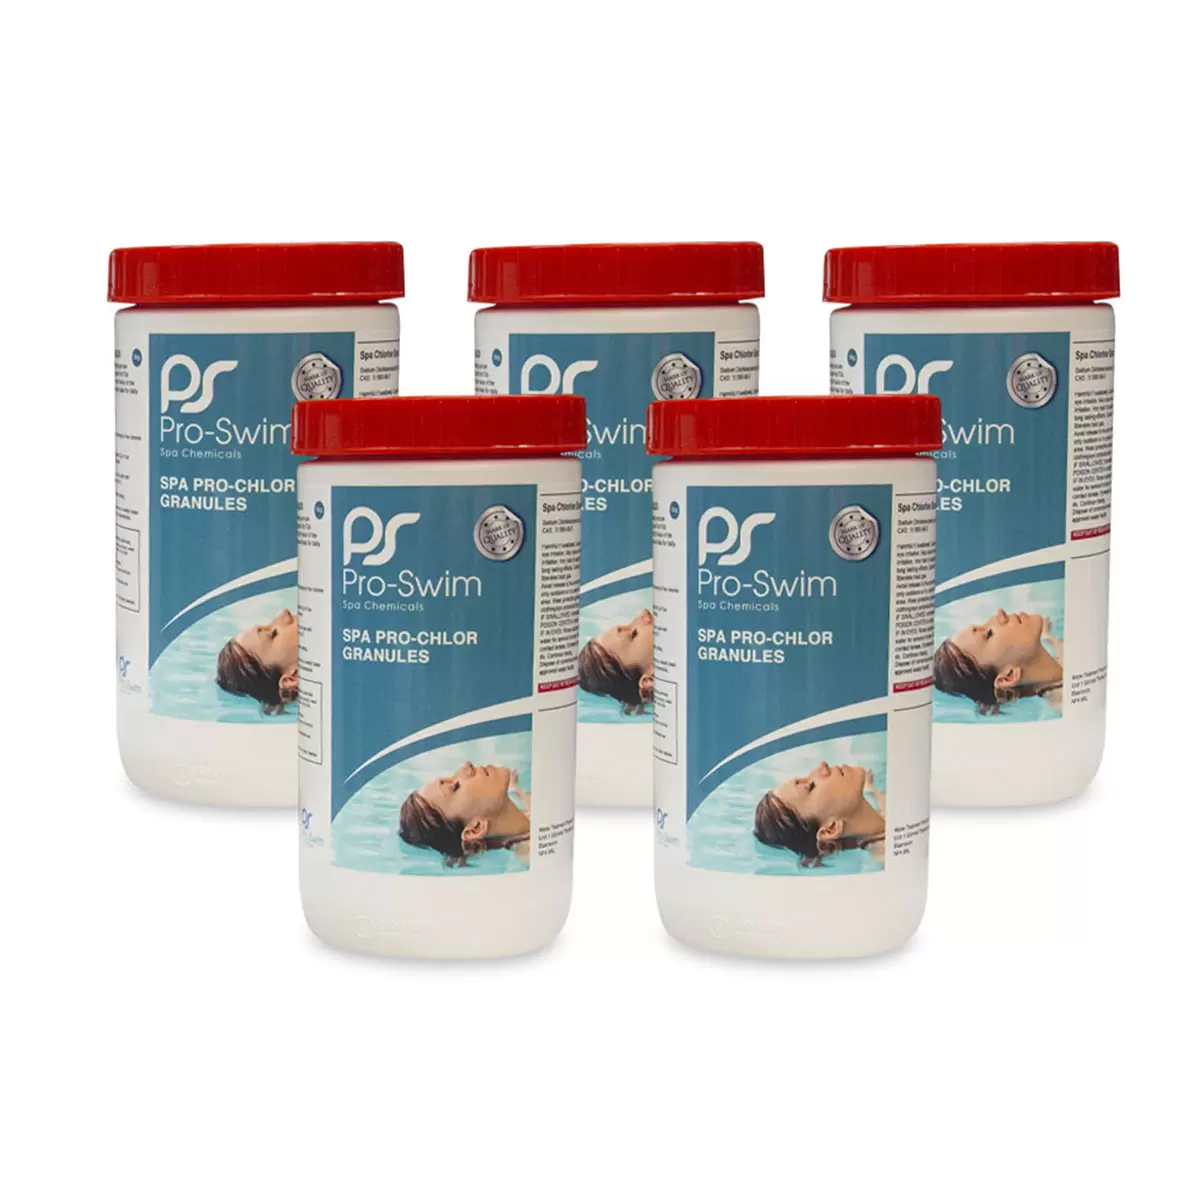 Lead Image for the Proswim Chlorine Granules Kit